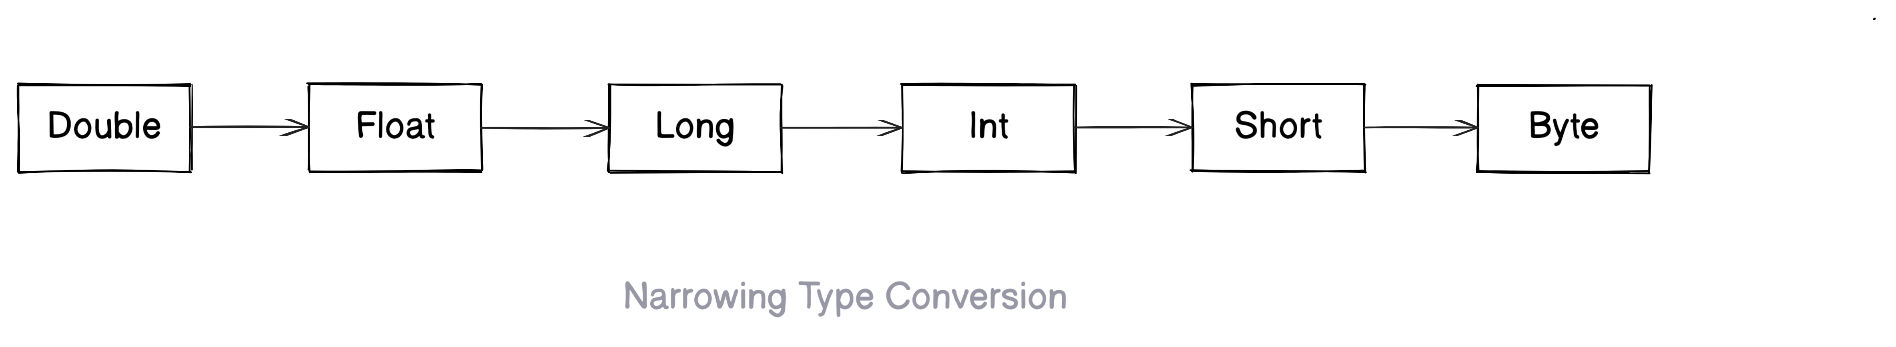 Narrowing Type Conversion in Java